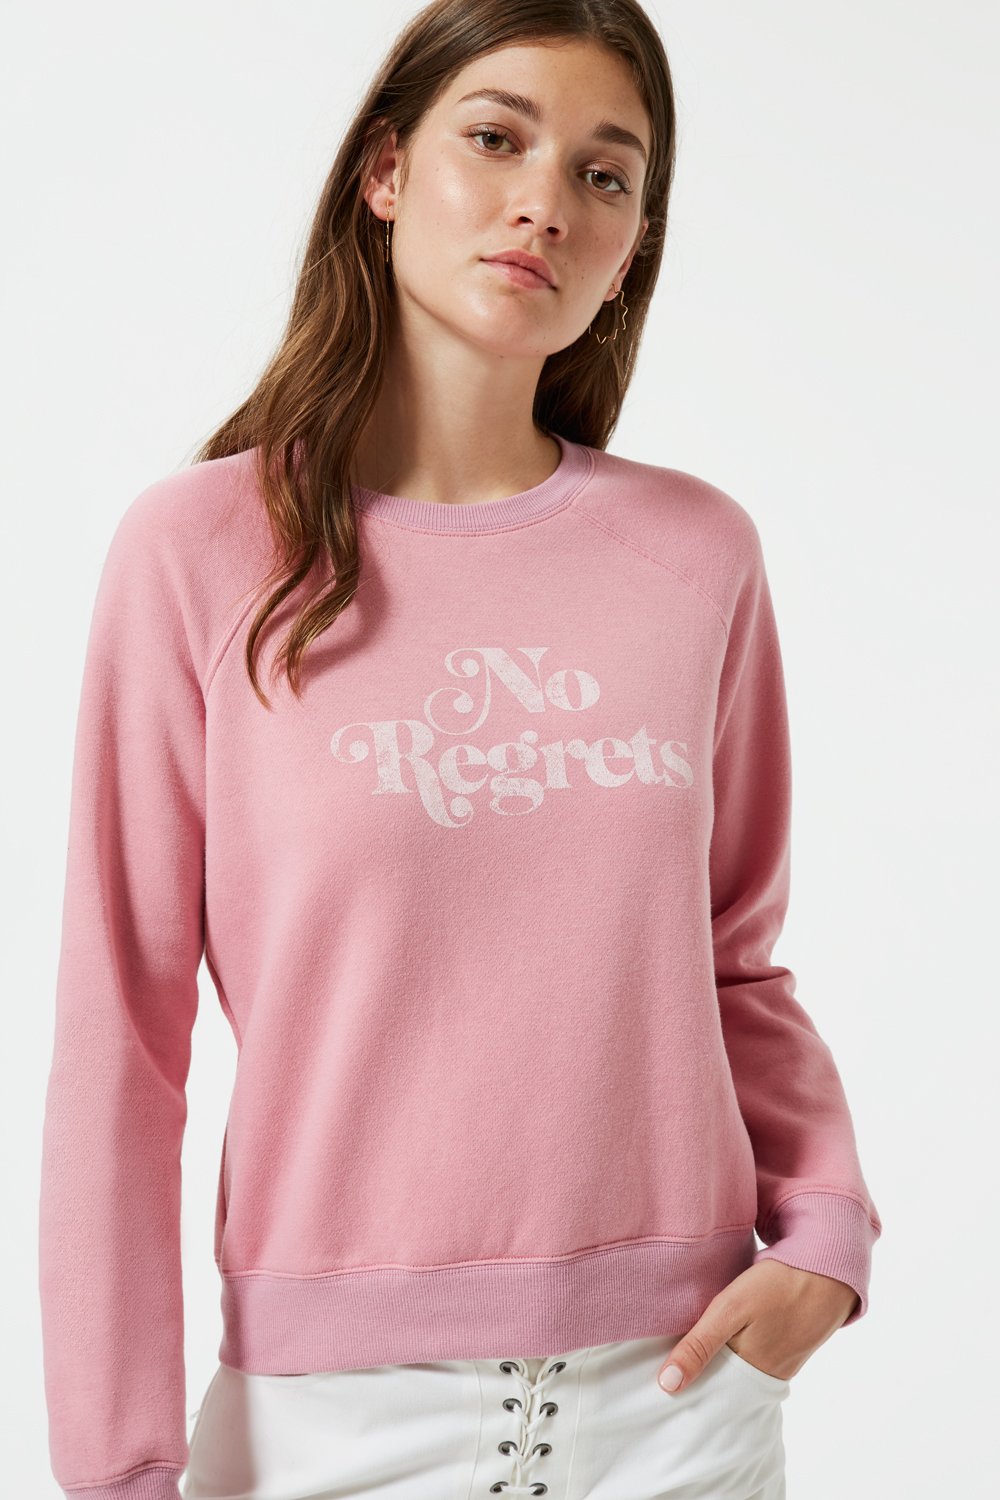 No Regrets Sweatshirt